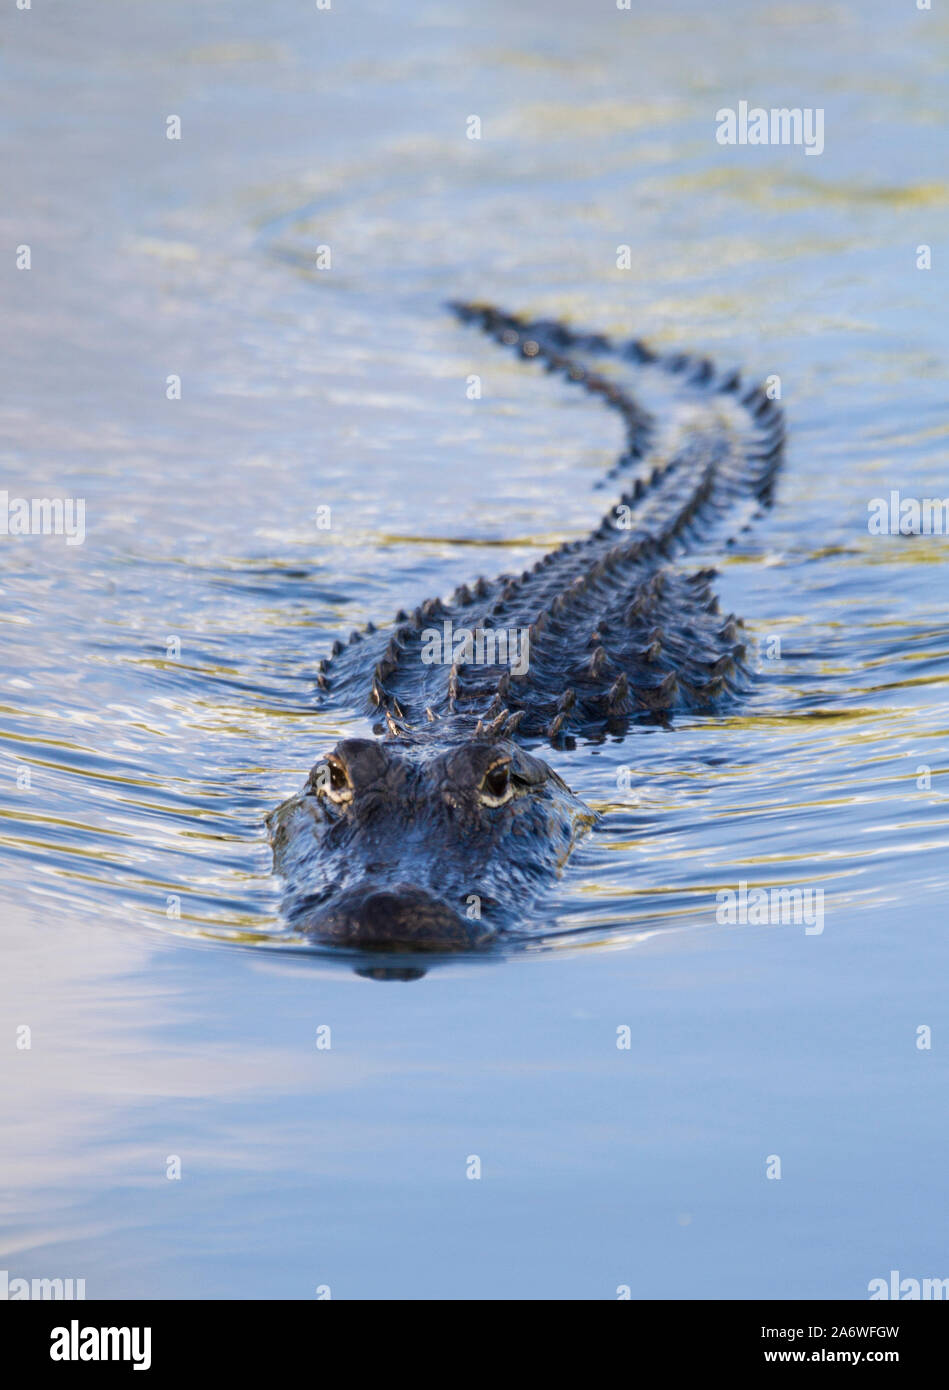 AMERICAN ALLIGATOR (Alligator mississippiensis) swimming, Myakka River State Park, Florida, USA. Stock Photo